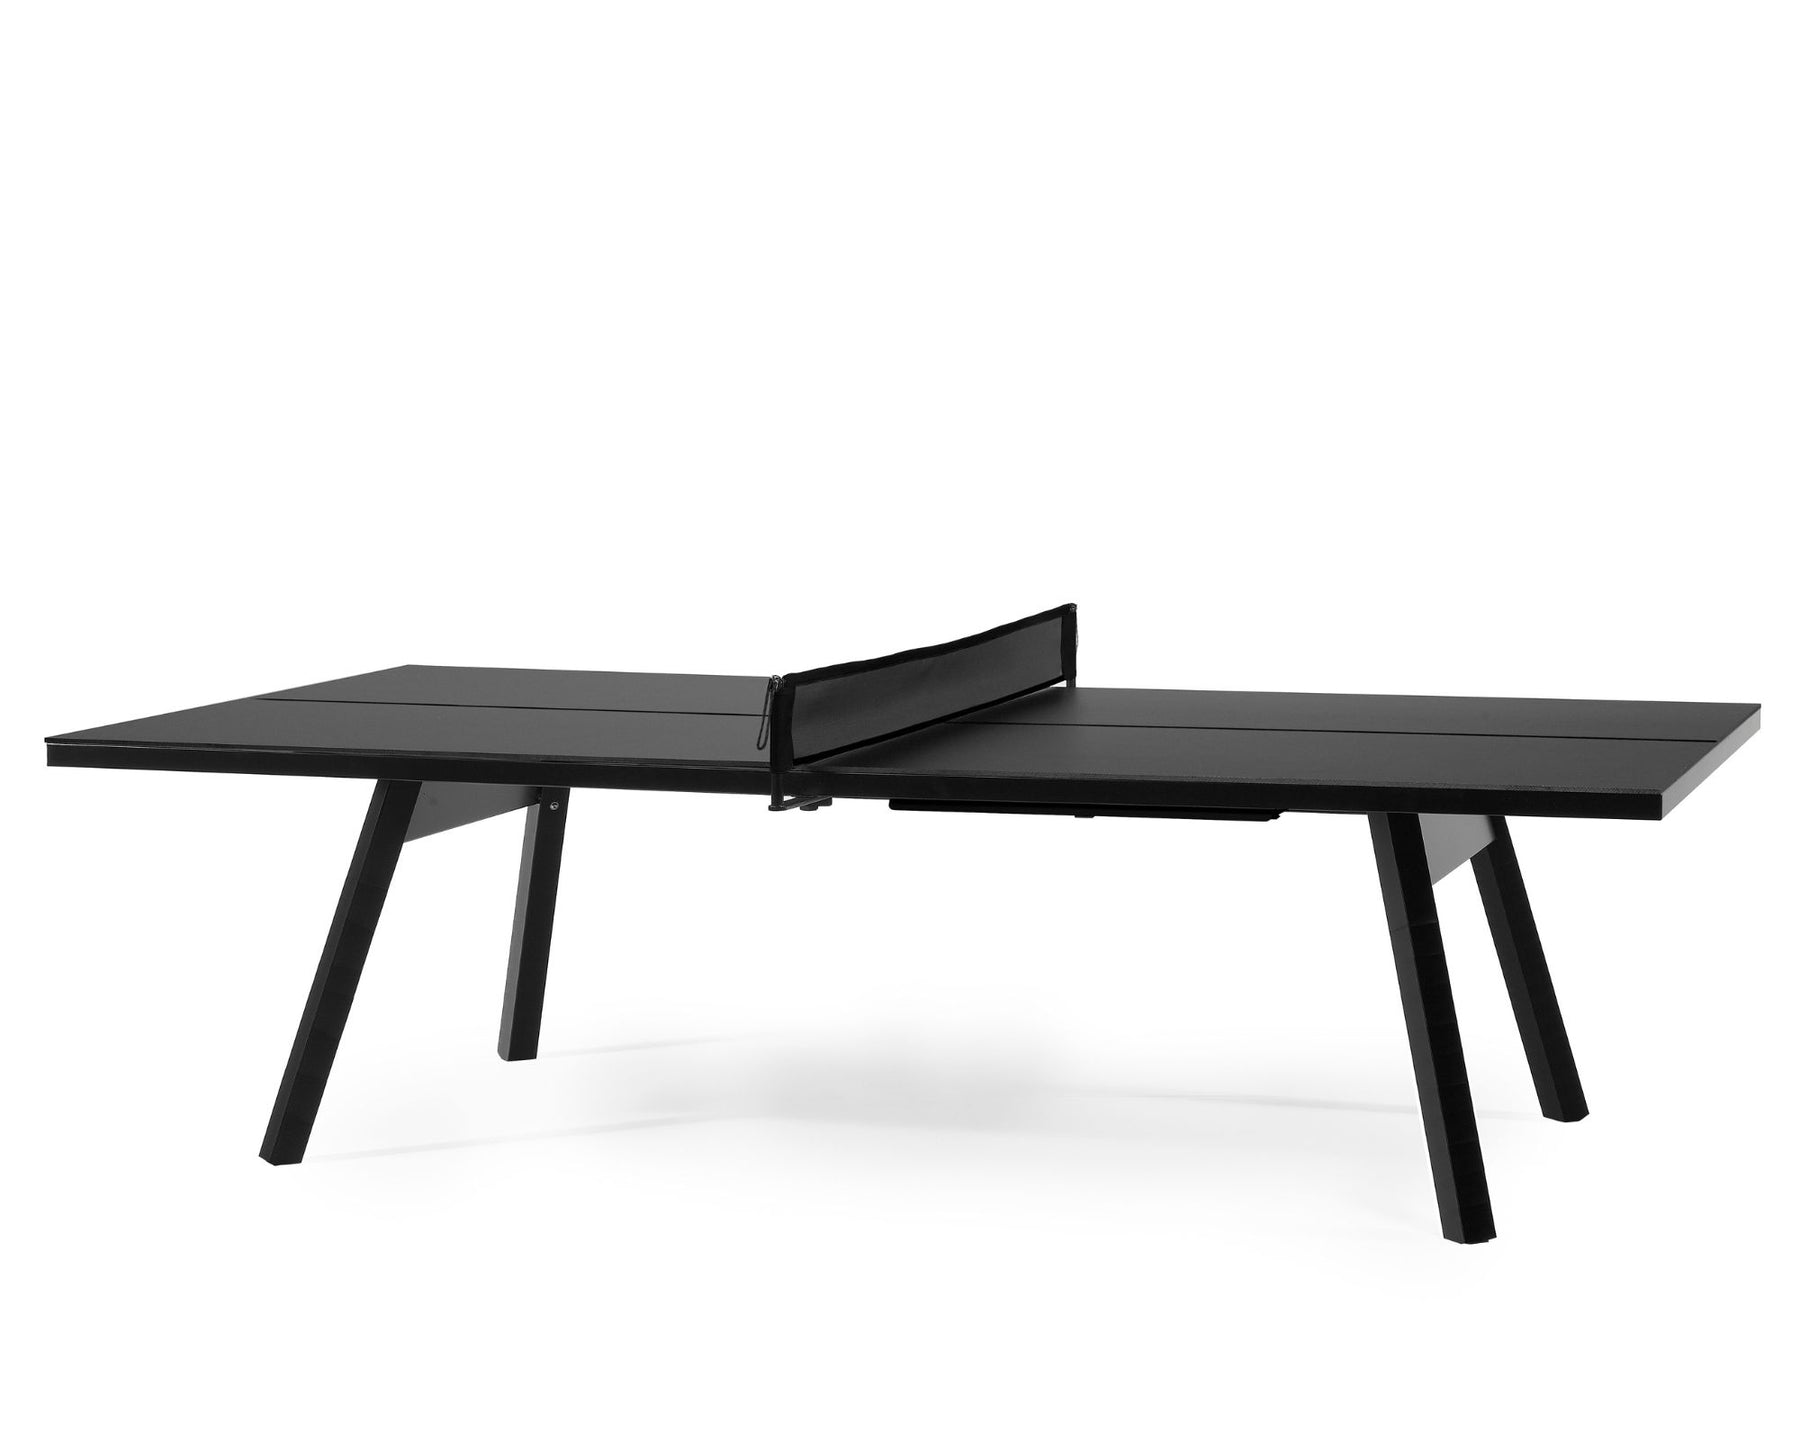 You & Me Ping Pong Table, Monochrome | DSHOP